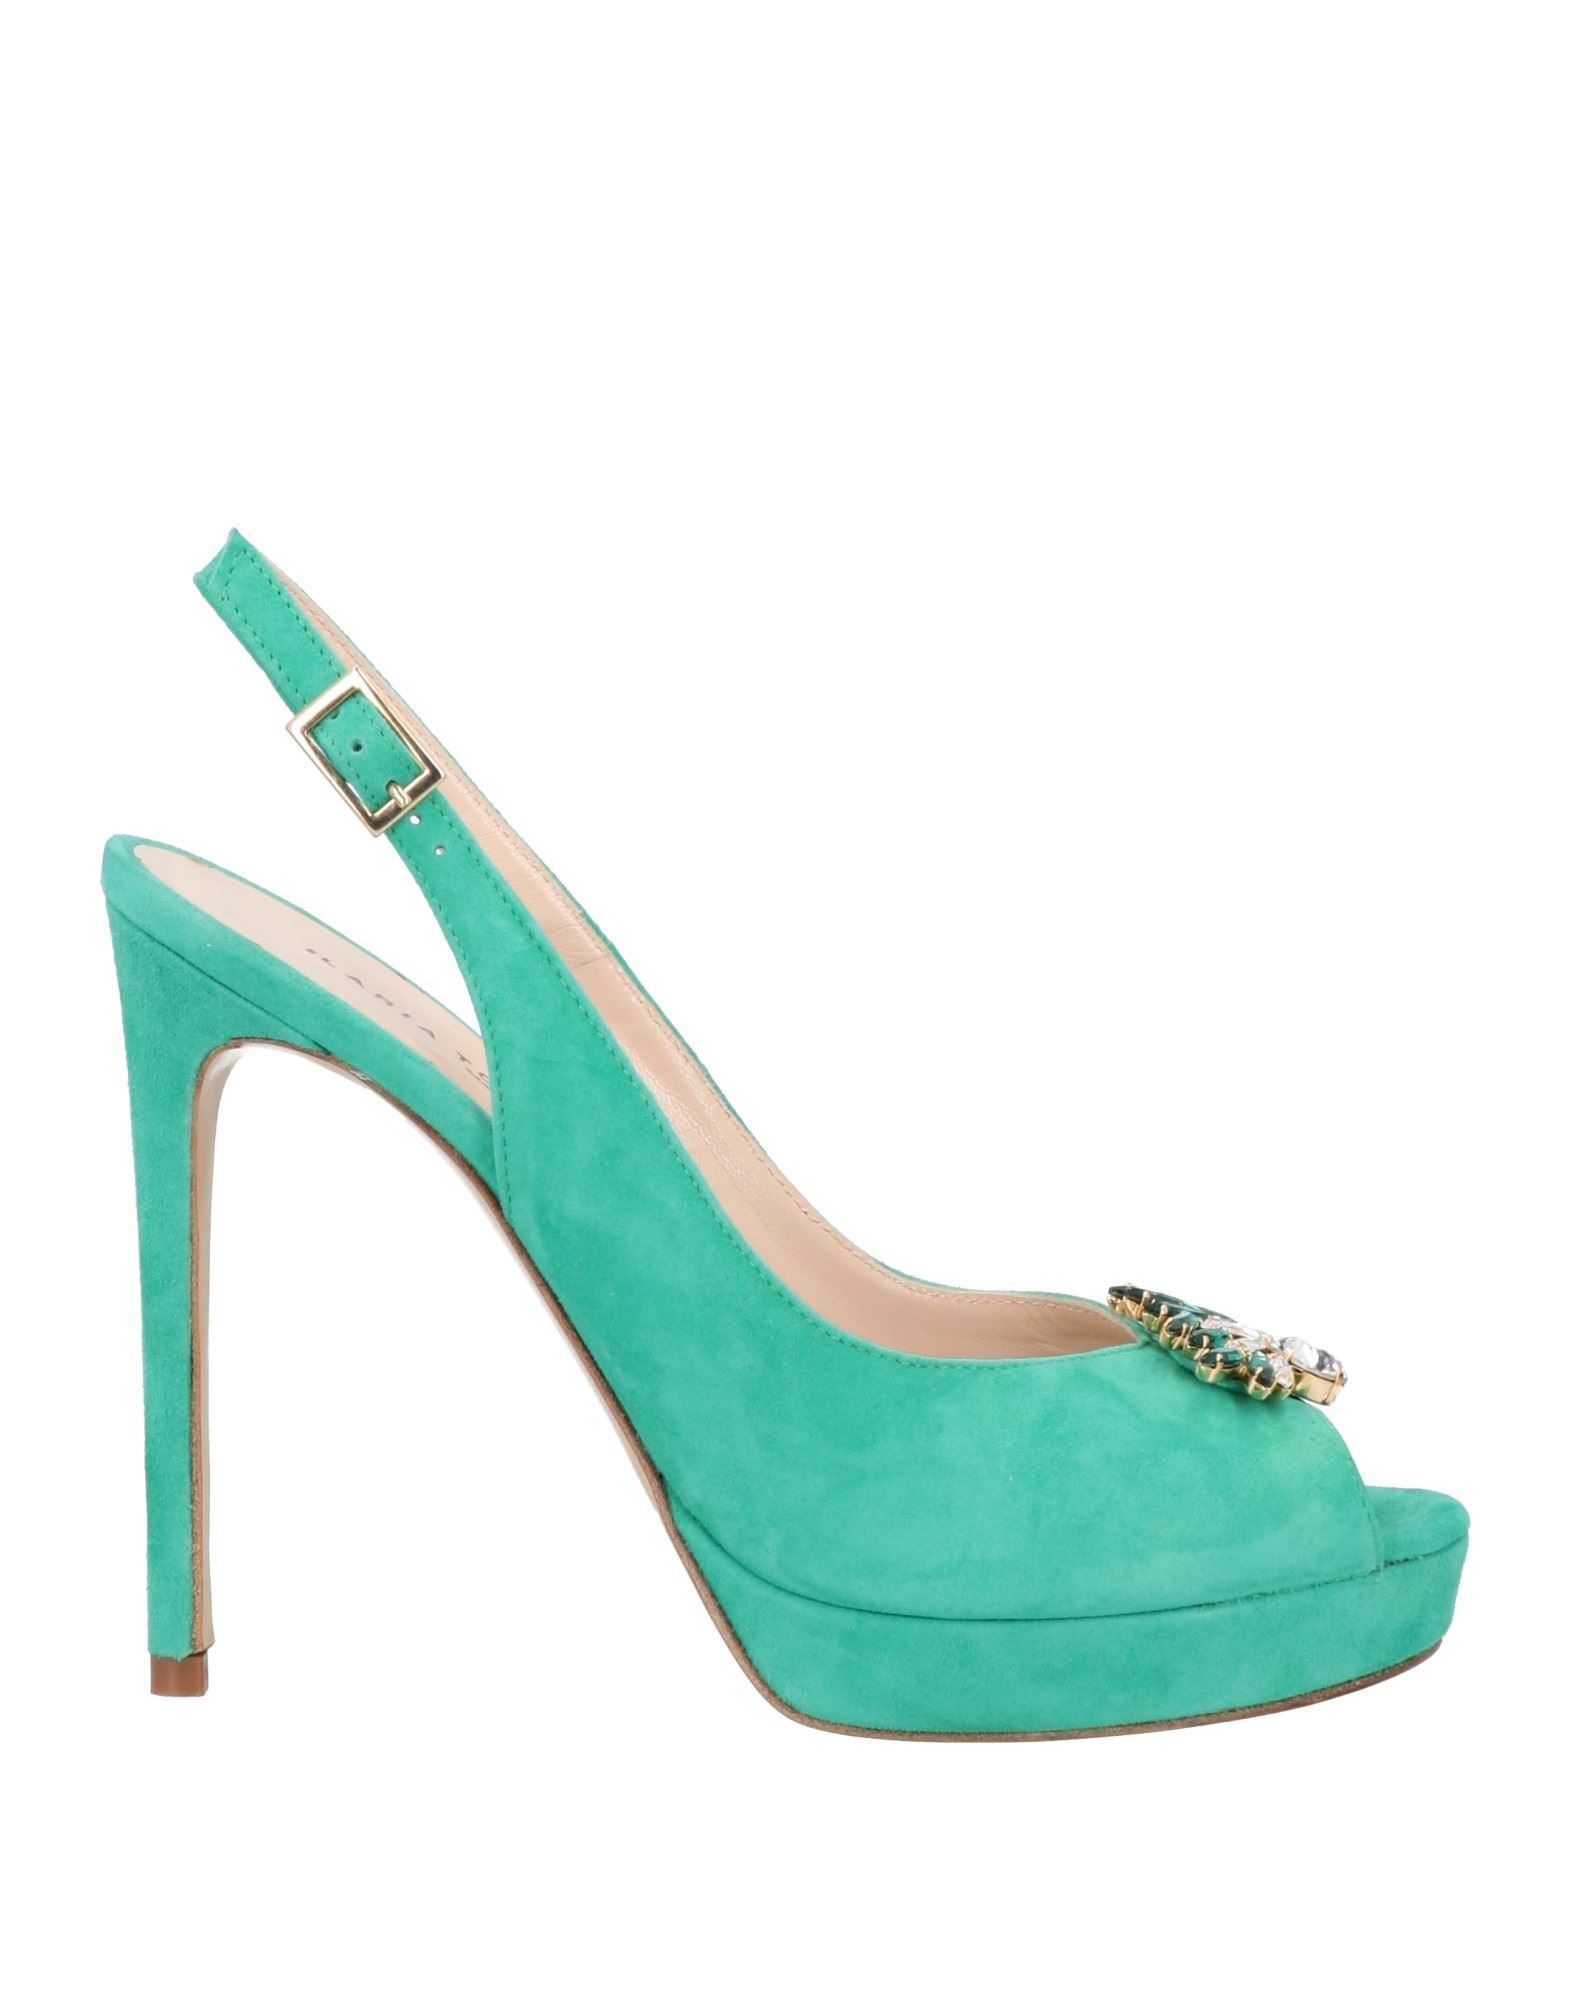 Ilaria Toschi Sandals In Light Green